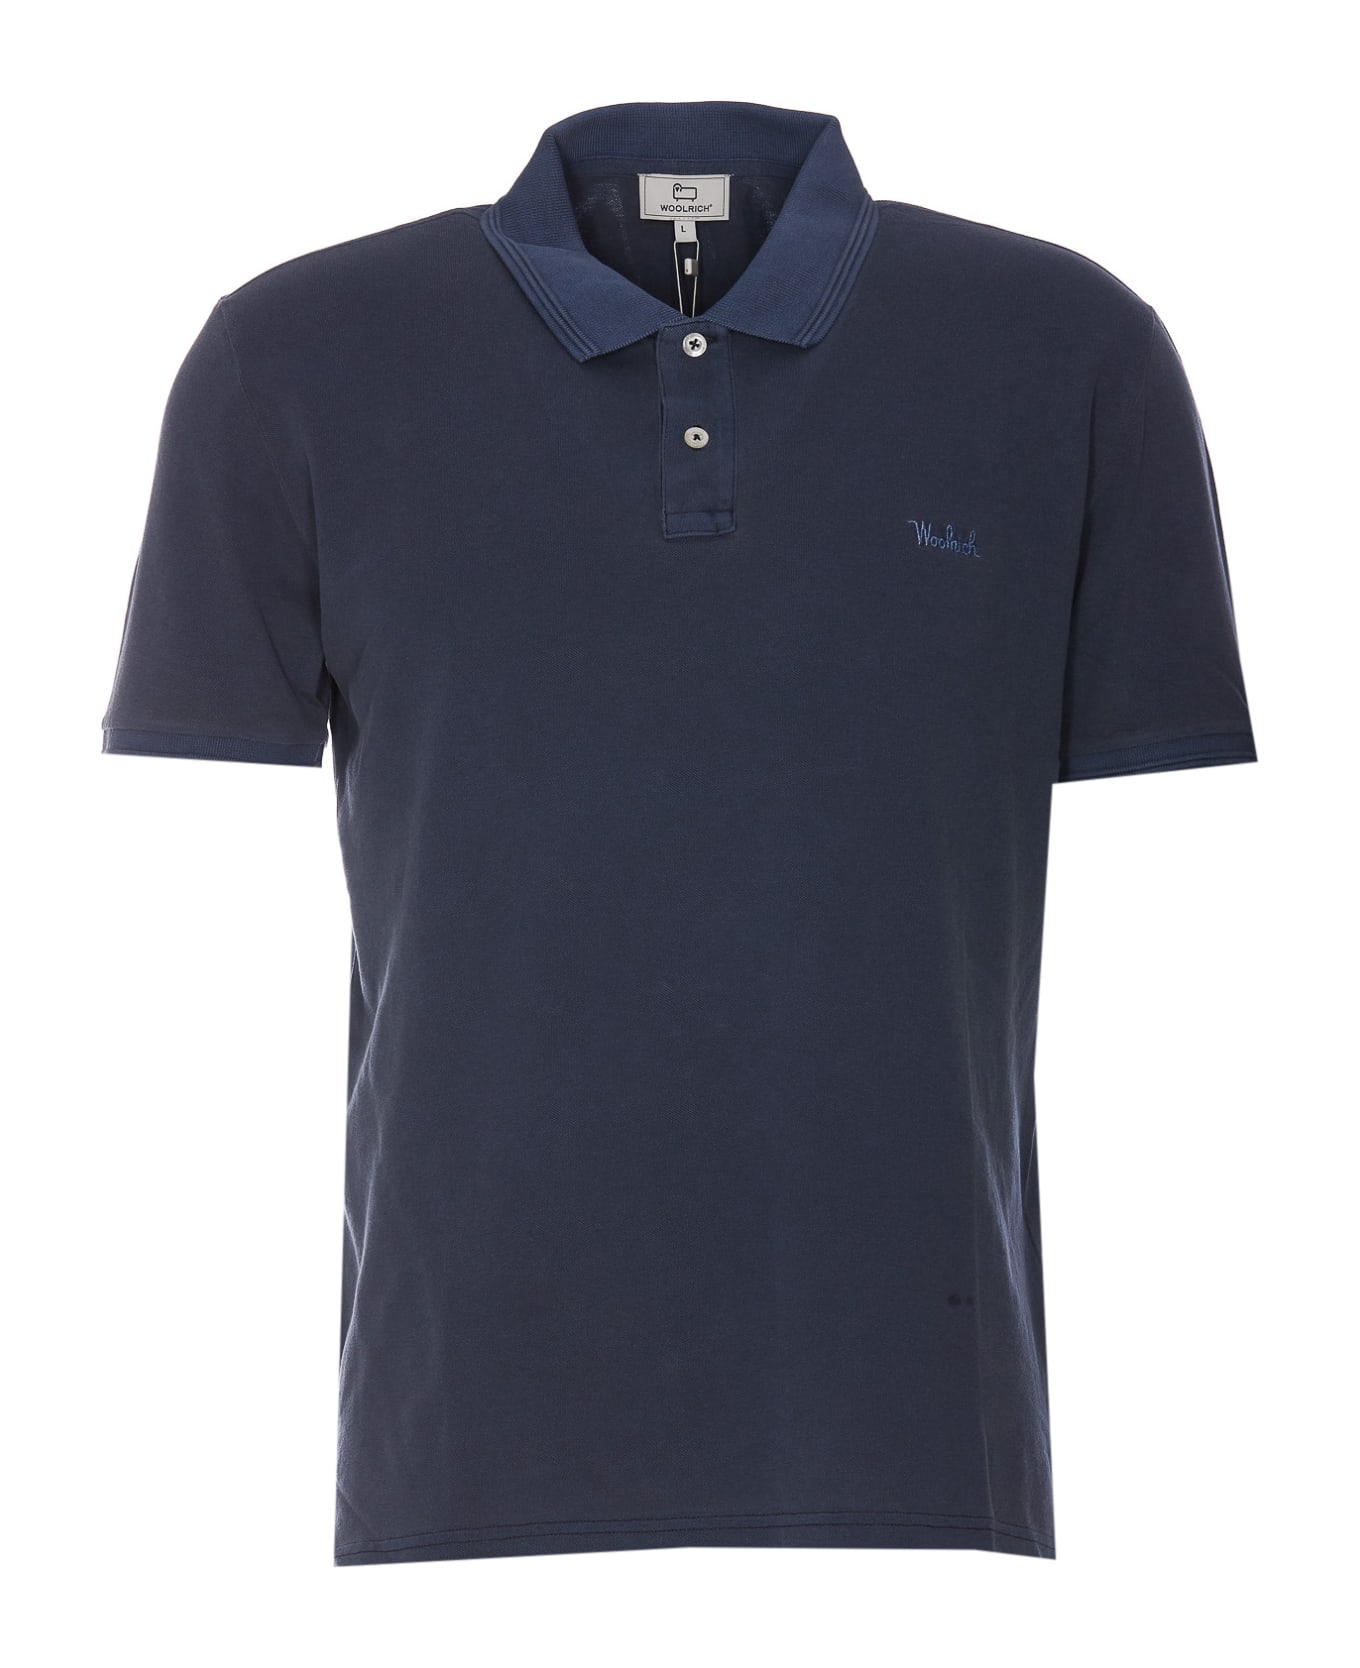 Woolrich Polo T-shirt - Melton Blue